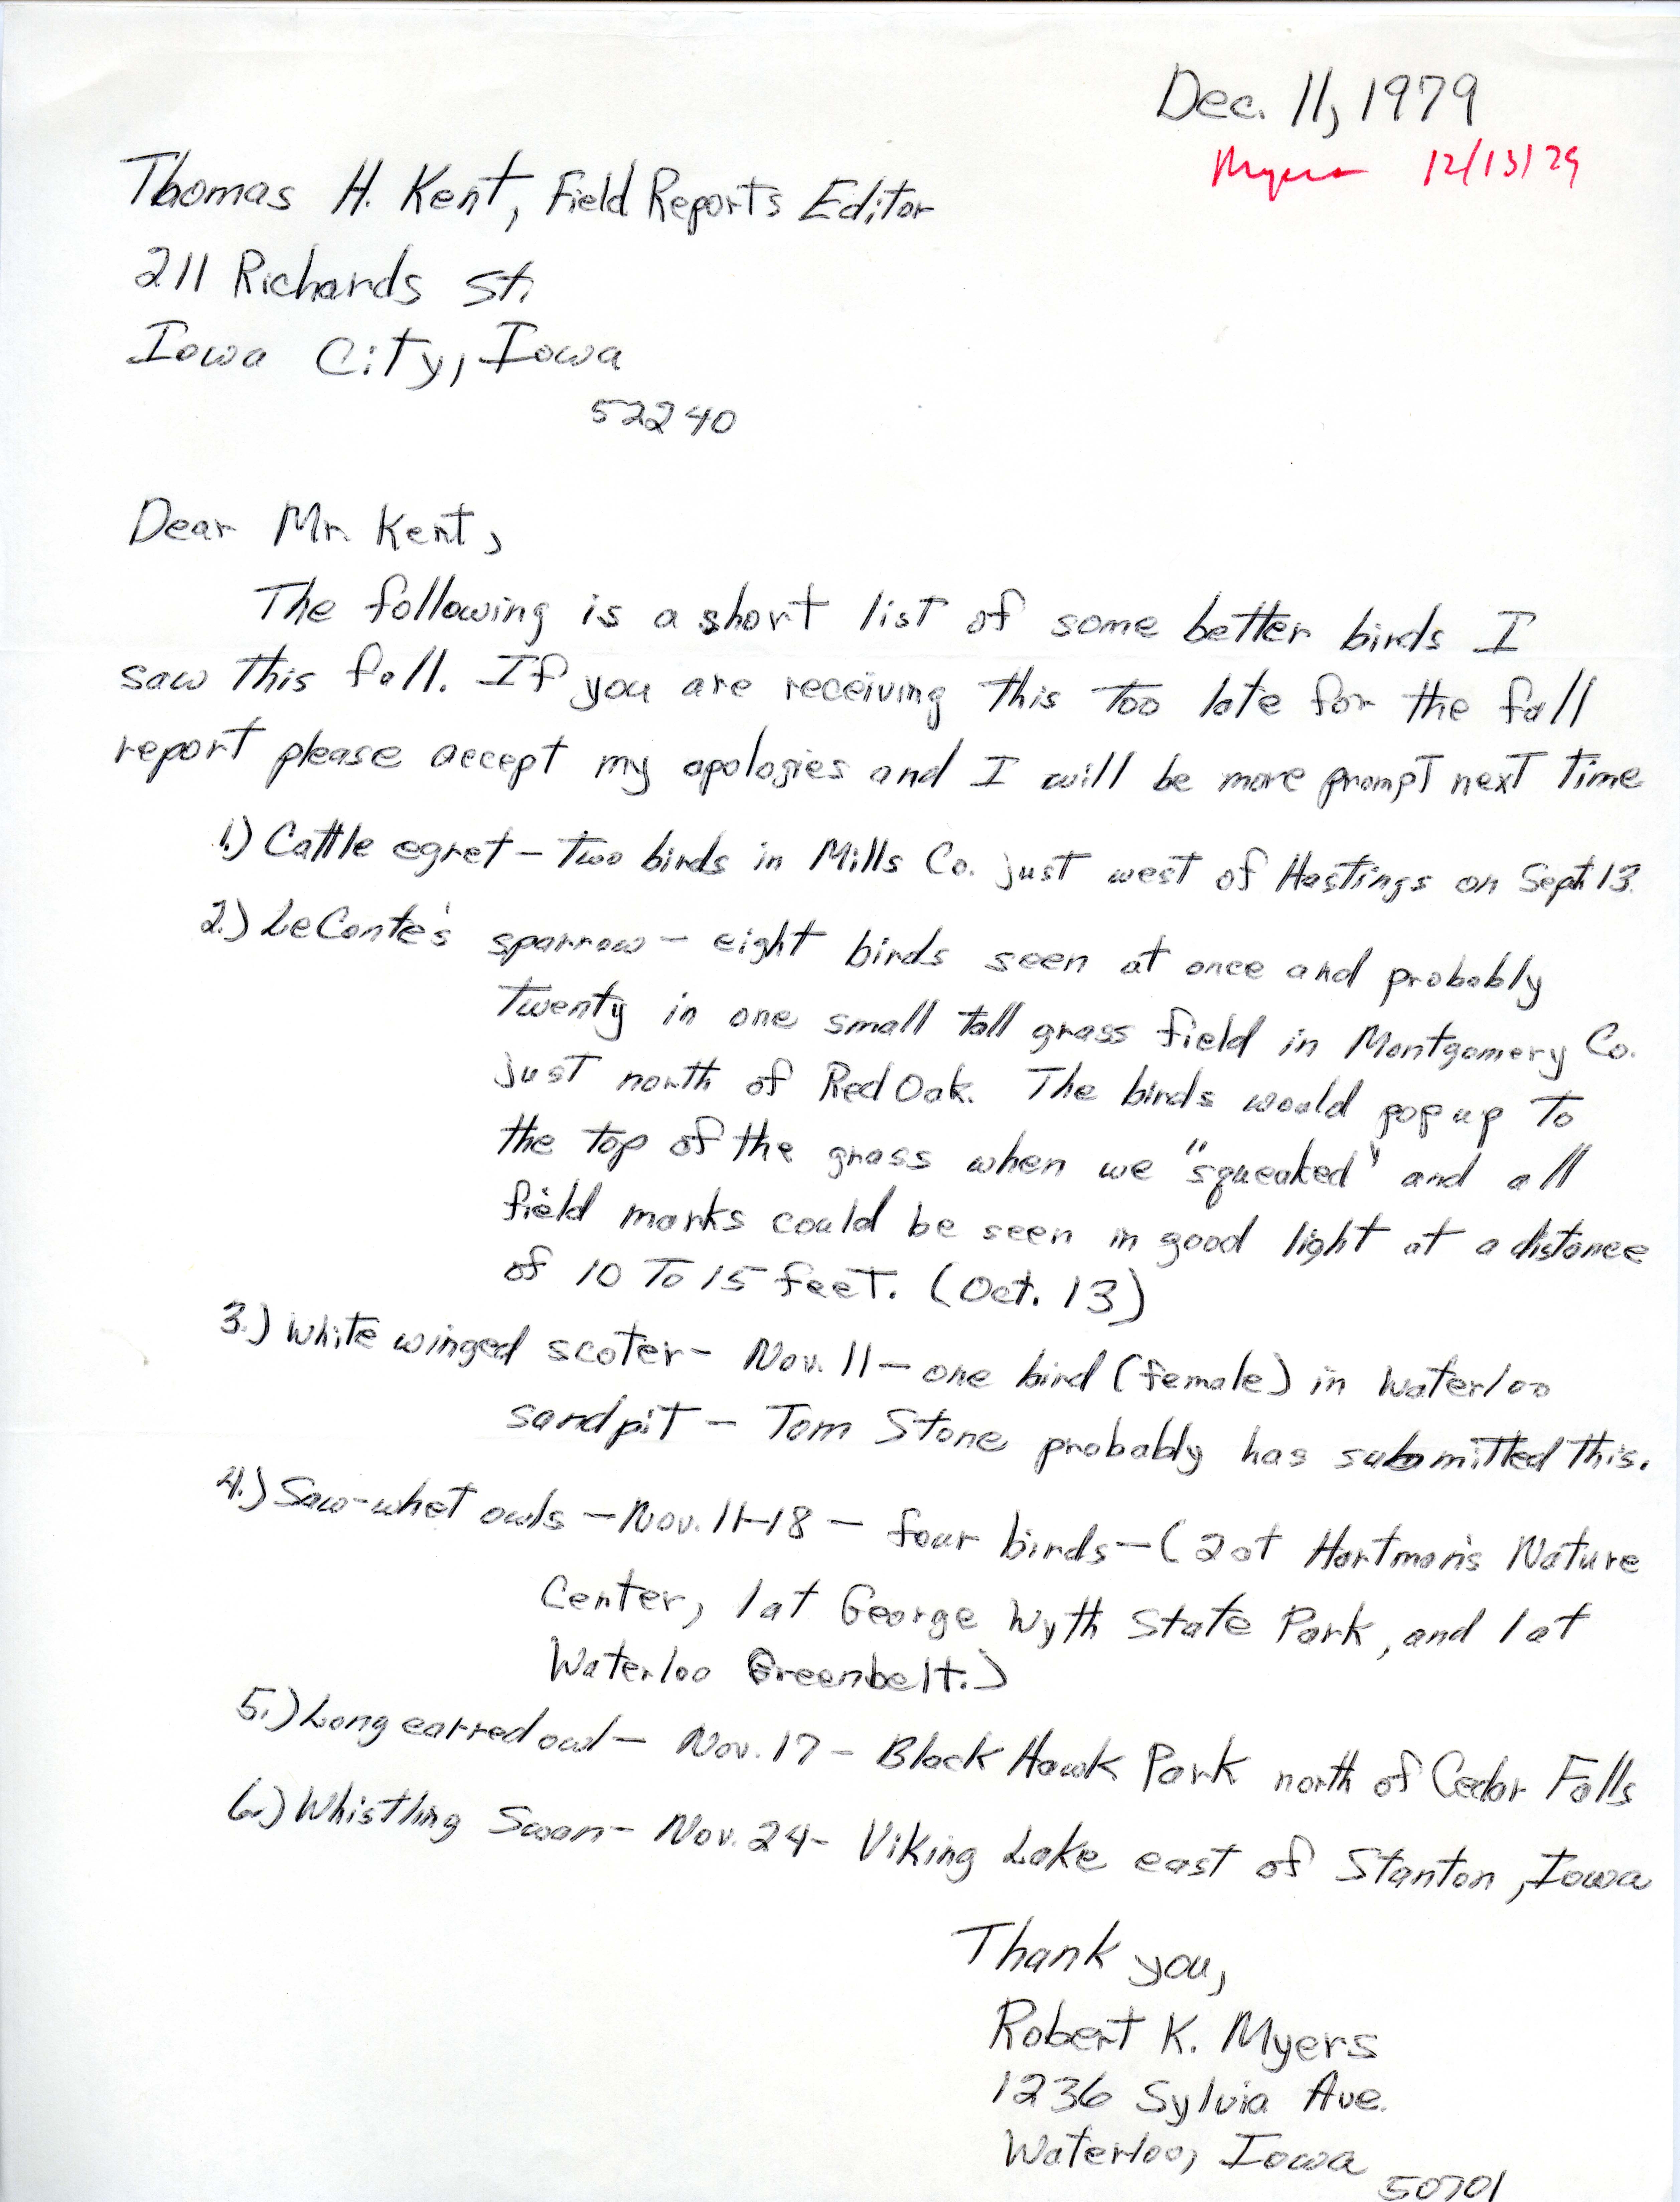 Robert K. Myers letter to Thomas H. Kent regarding bird sightings, December 11, 1979